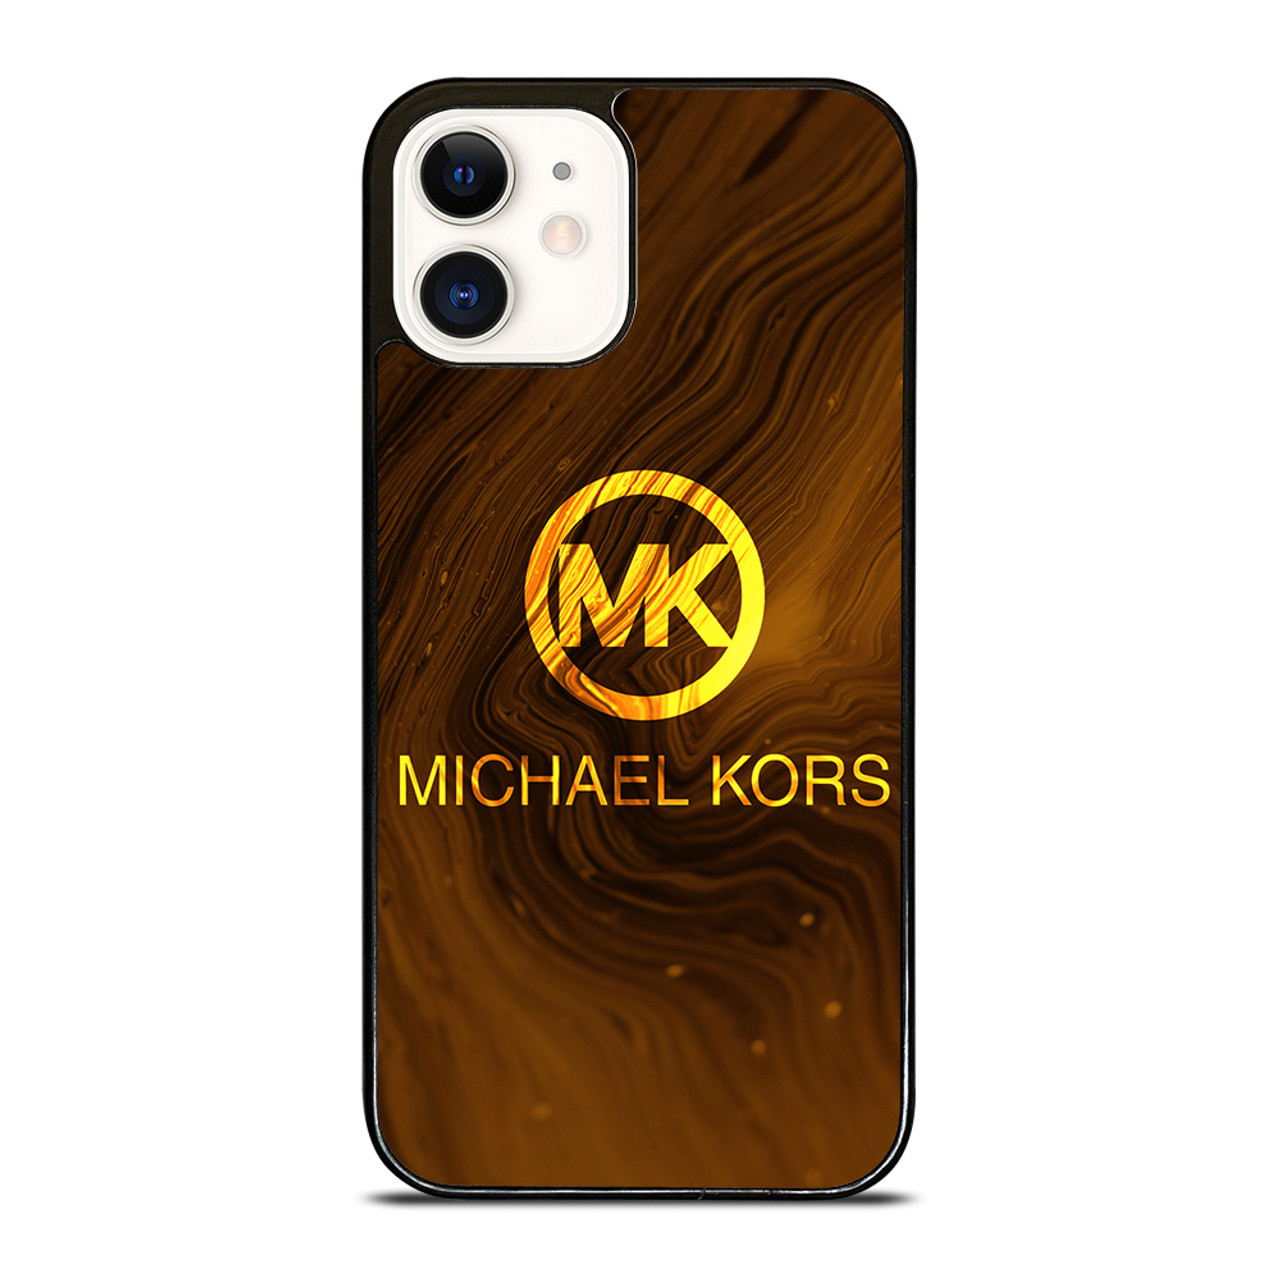 Michael Kors iPhone 